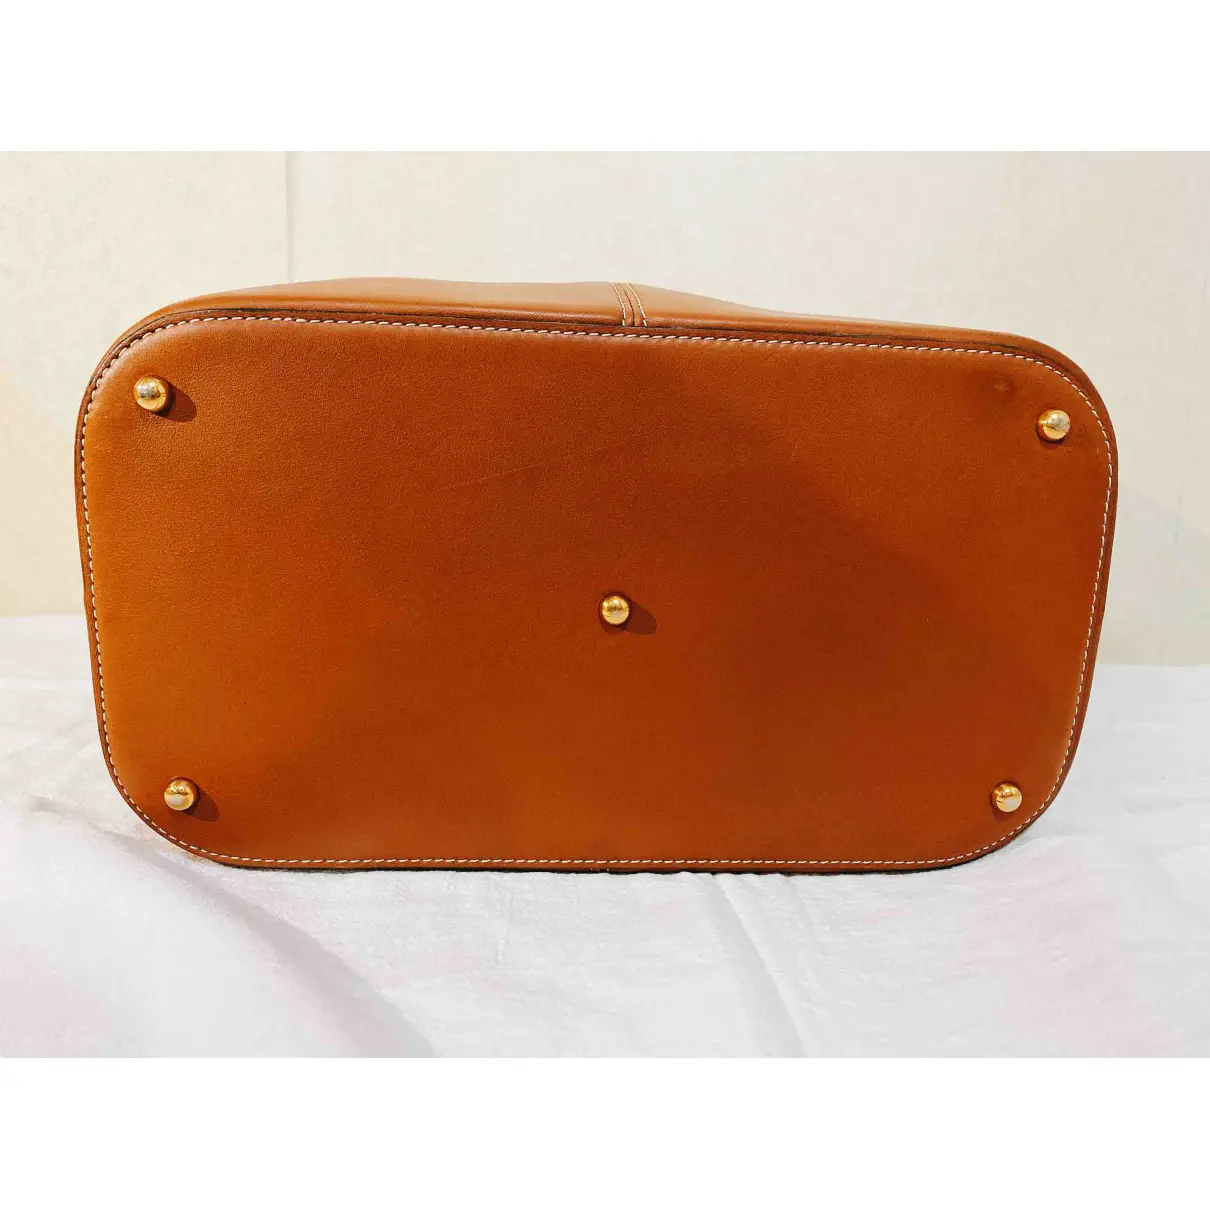 Leather handbag Loewe